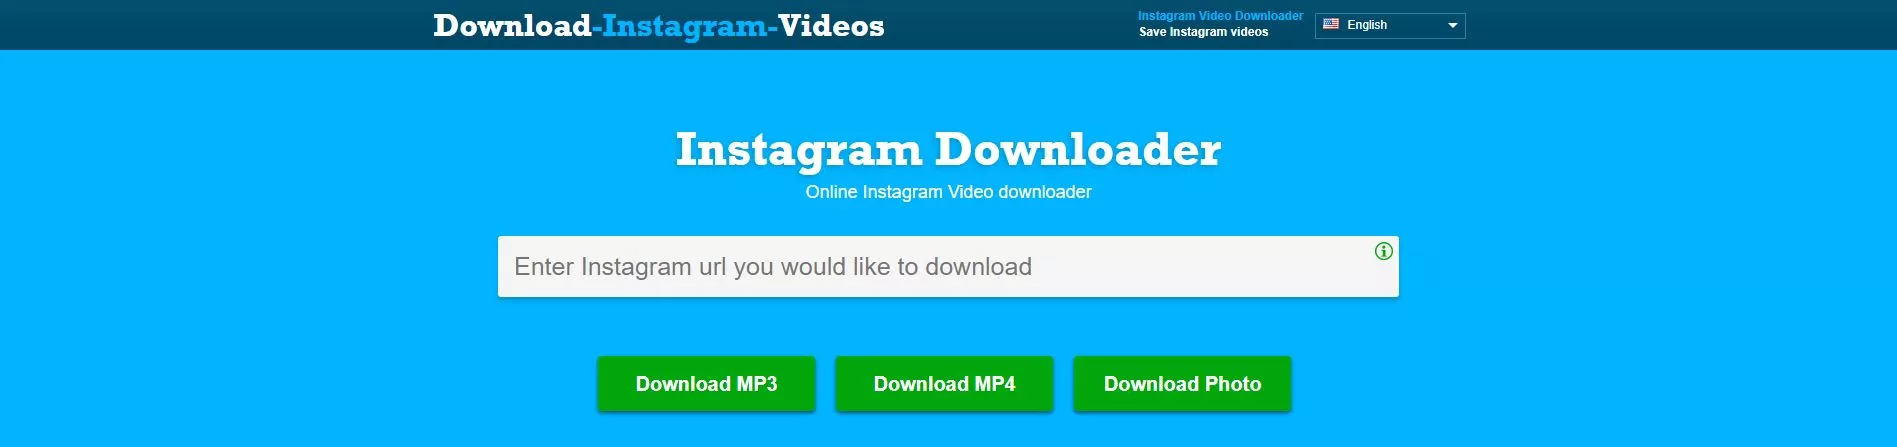 DownlodInstagramVideos Download Instagram Videos